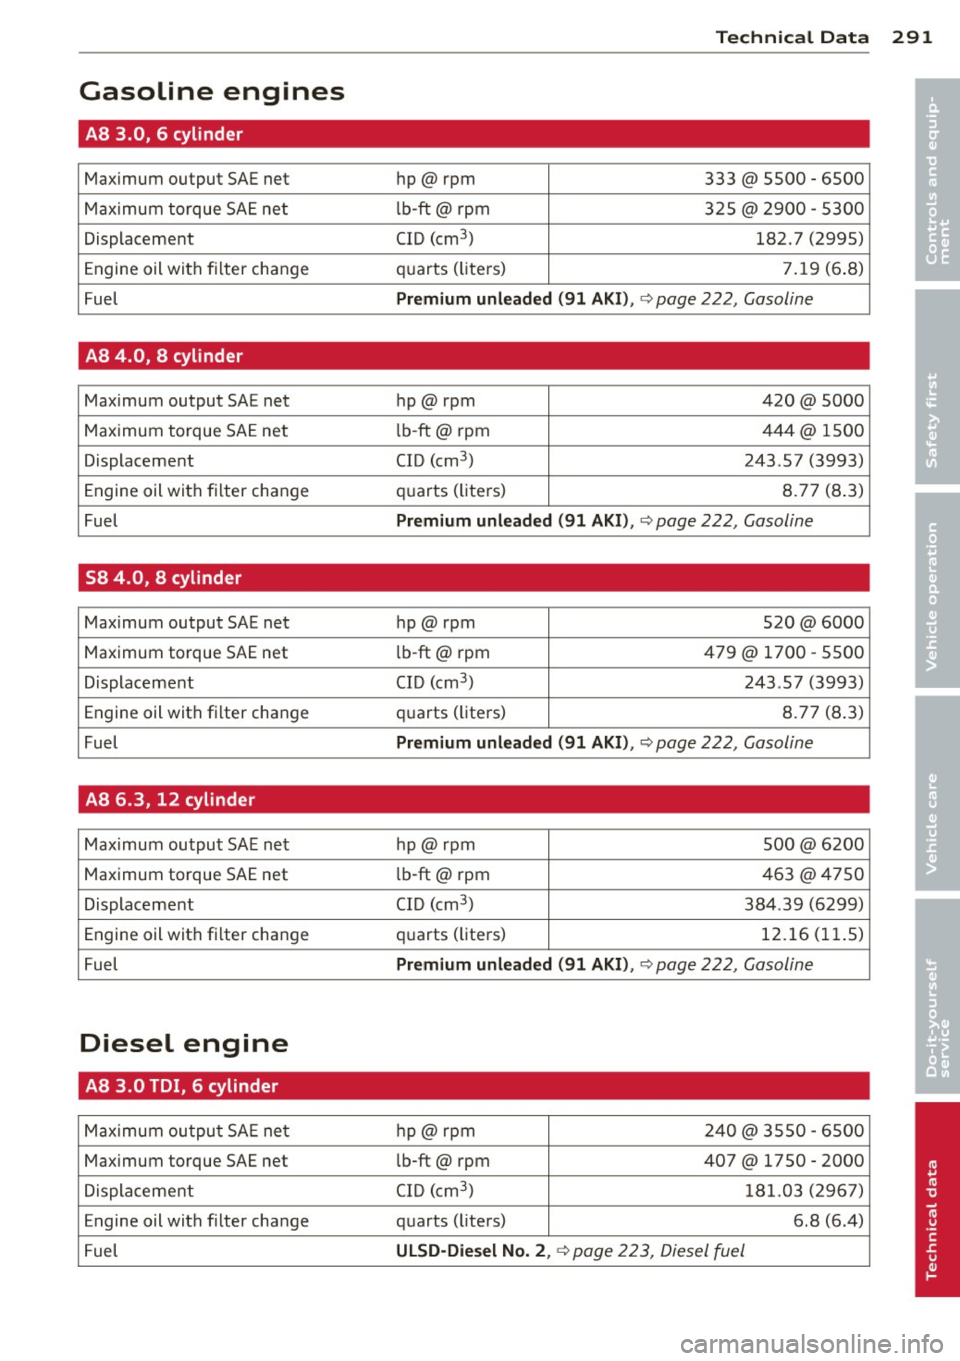 AUDI A8 2014  Owners Manual Technical  Dat a 291 
Gasoline  engines 
• 
AB 3.0,  6  cylinder • 
Maximum  output  SAE net  hp@rpm 333 @ 5500  -6500 
Maximum  torque  SAE net  lb-ft@  rpm  325@  2900  - 5300 
Displacement  CID